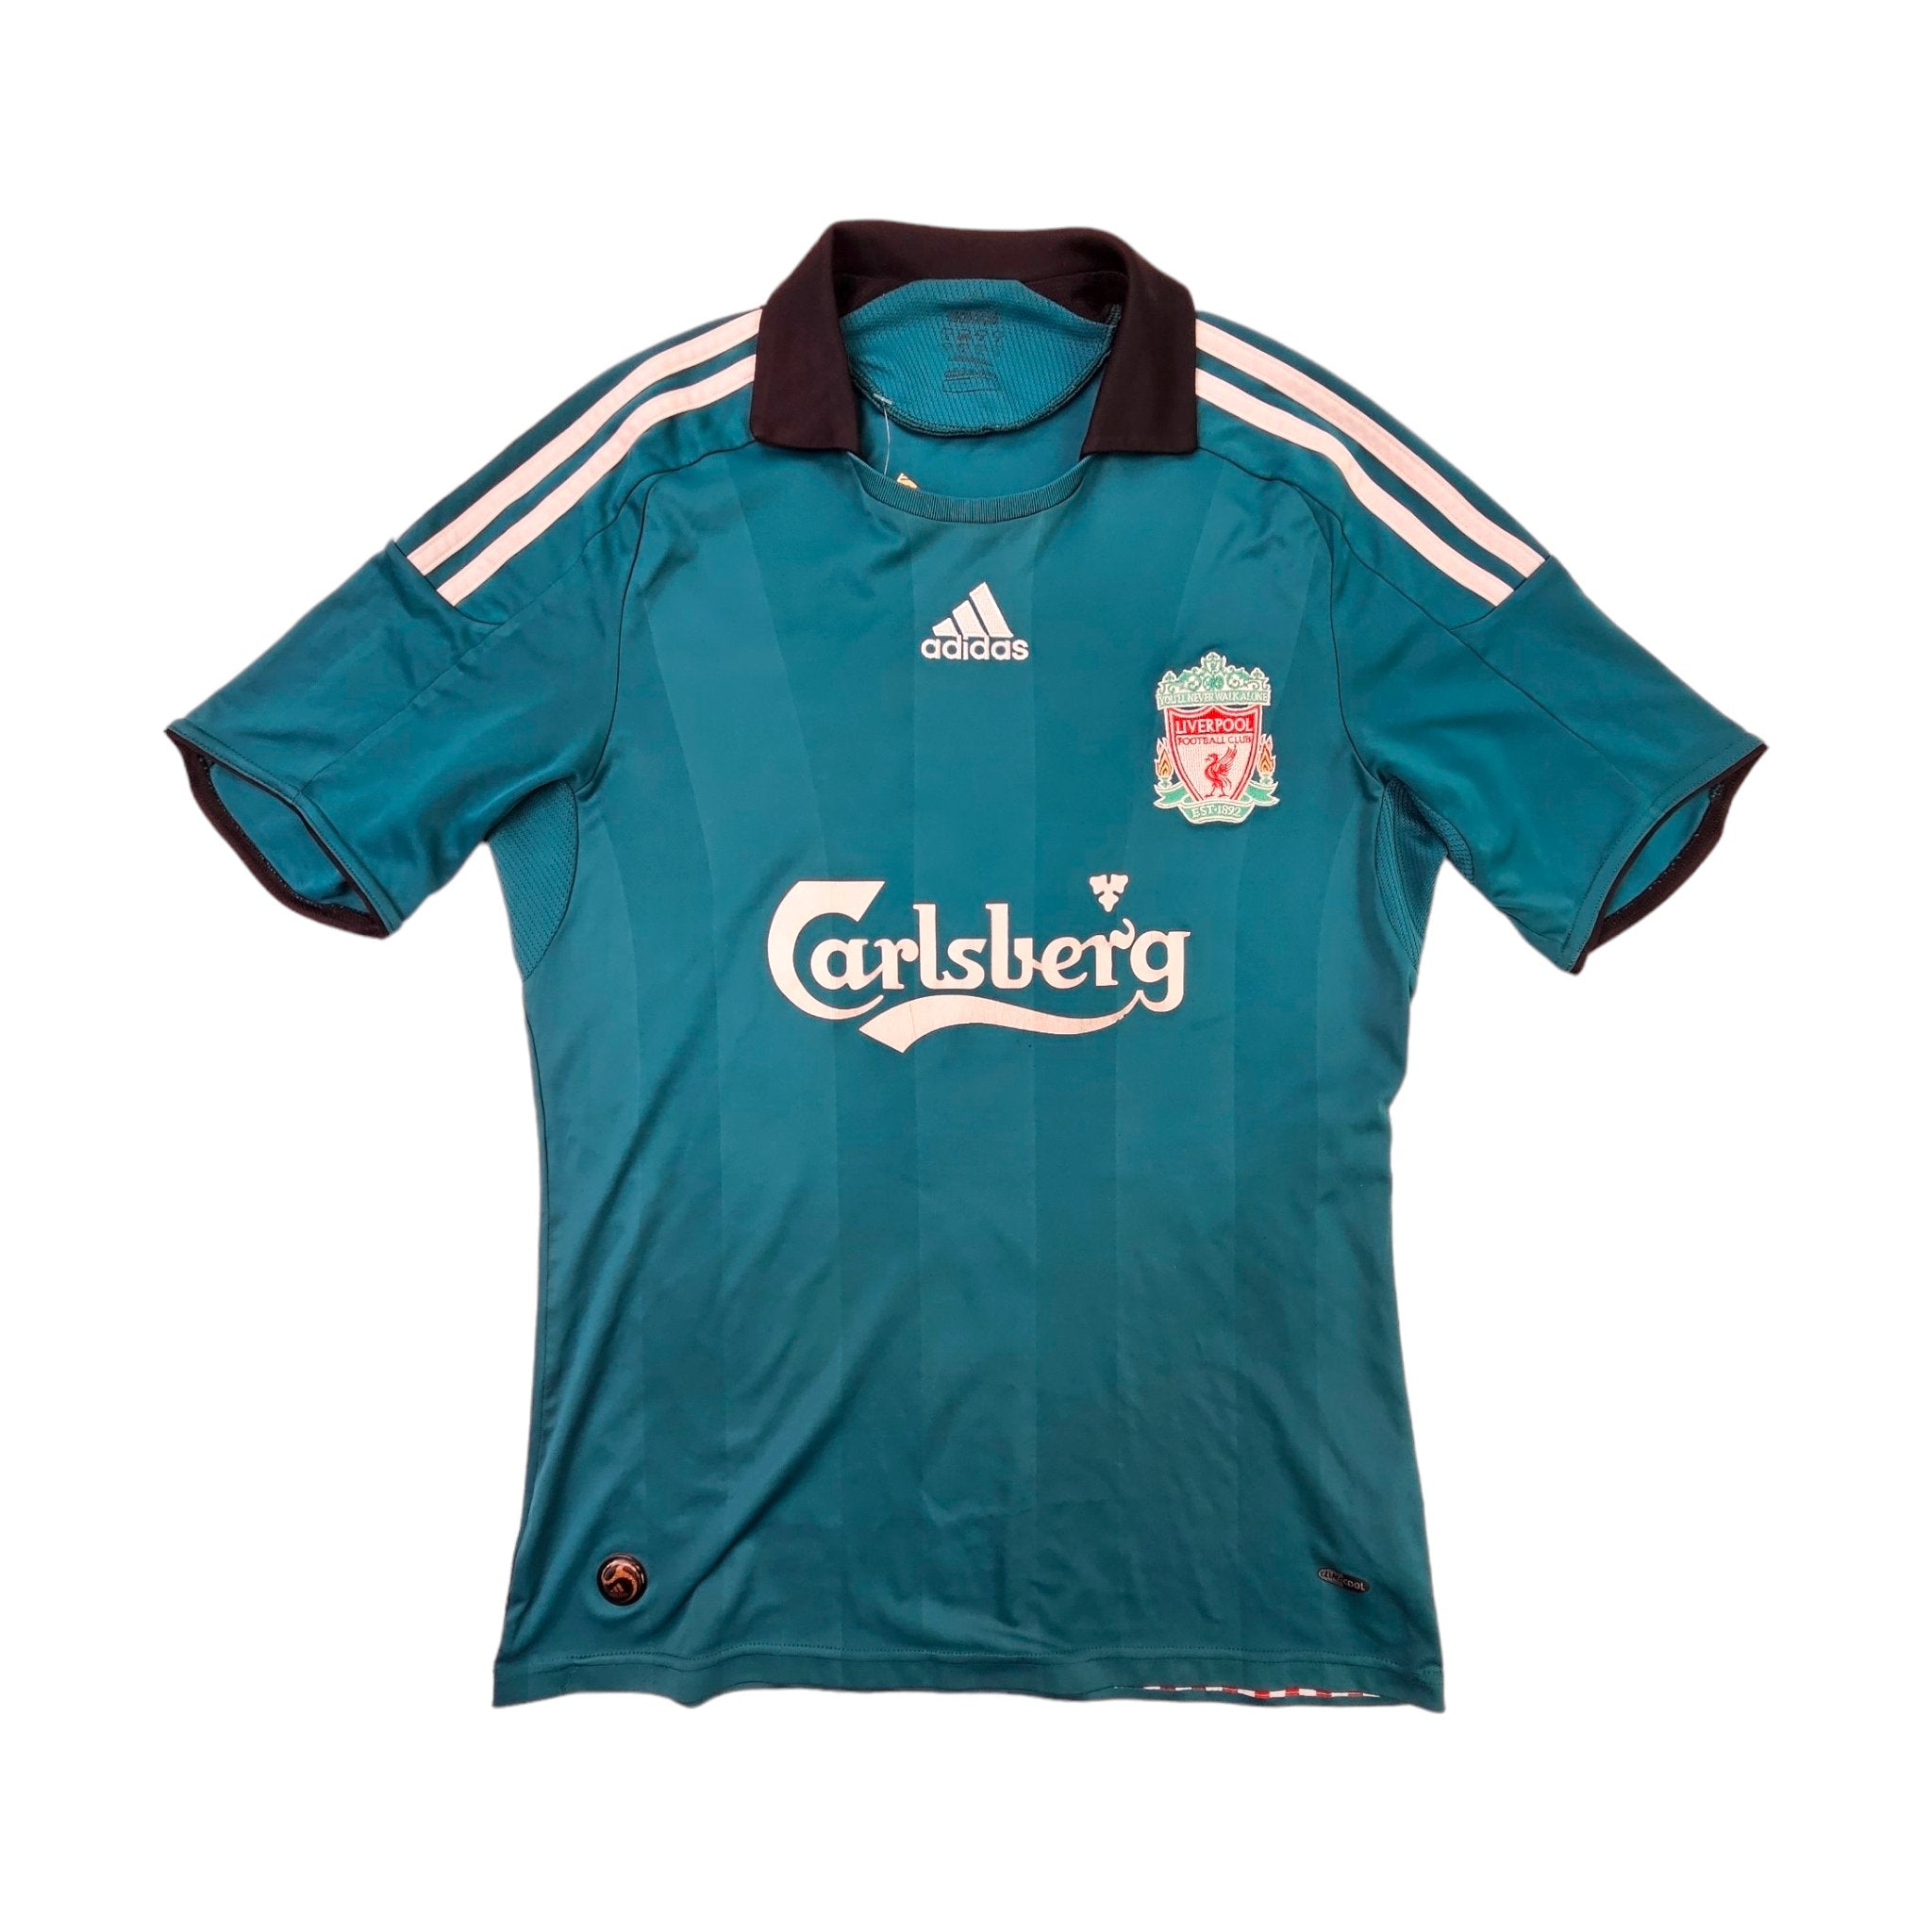 2008/09 Liverpool Third Football Shirt (S) Adidas #8 Gerrard 